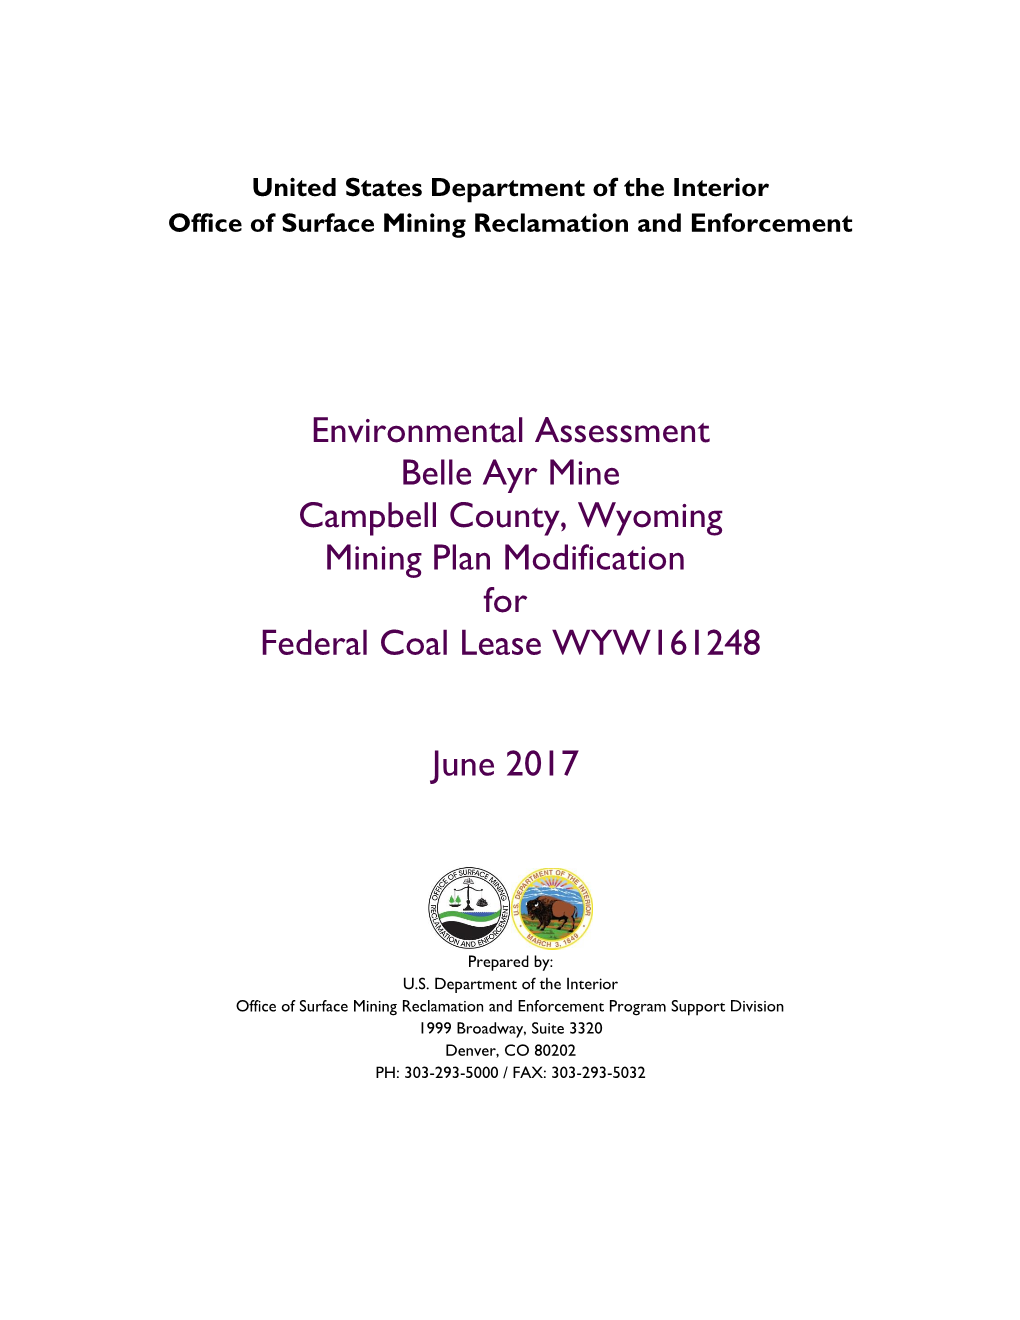 Environmental Assessment, Belle Ayr Mine Campbell County